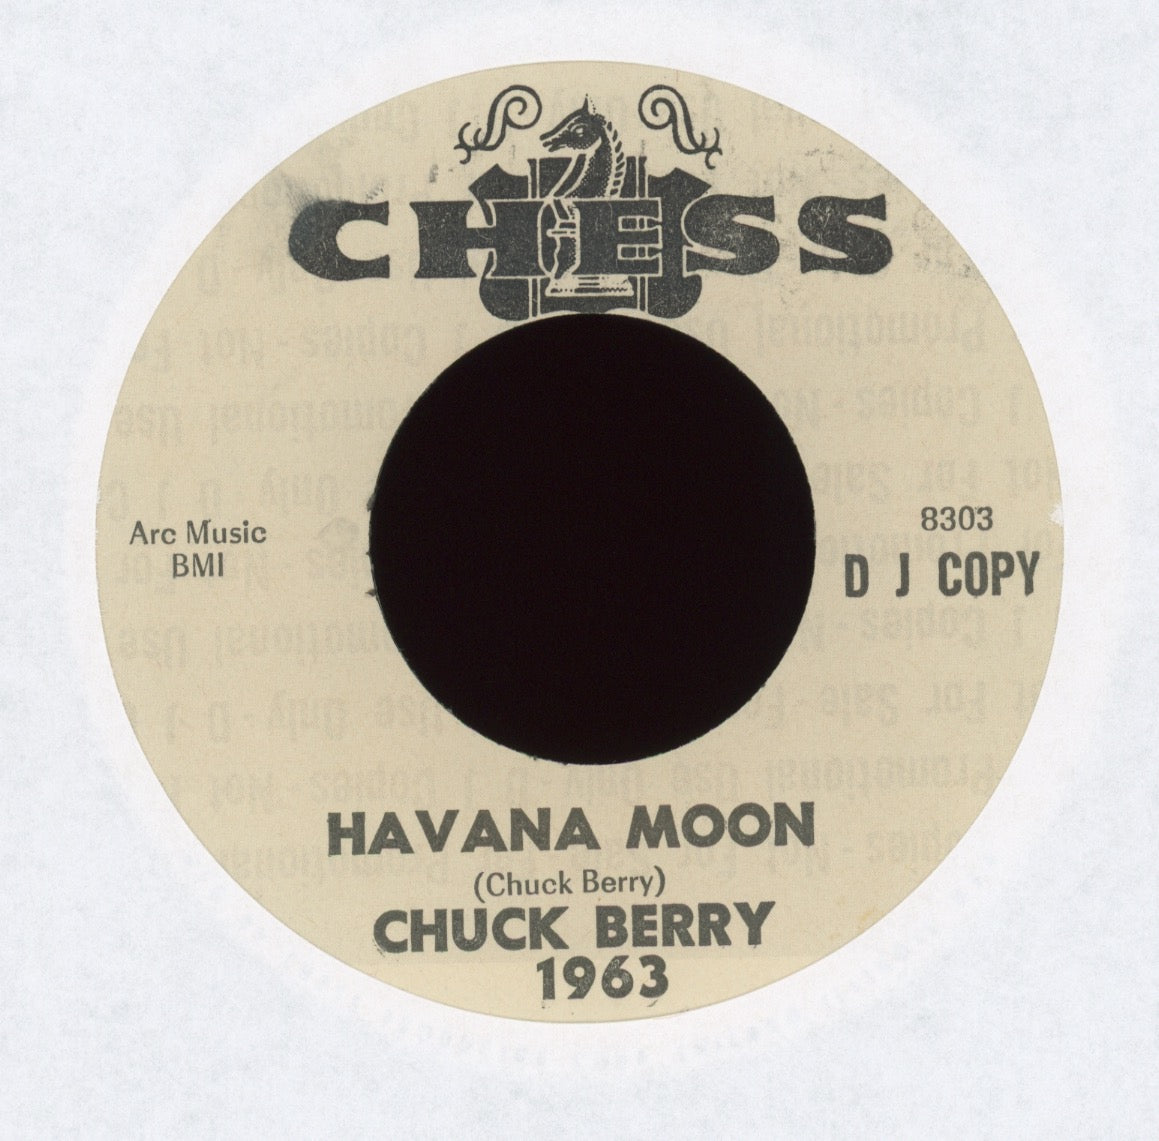 Chuck Berry - Havana Moon on Chess Single Sided Promo